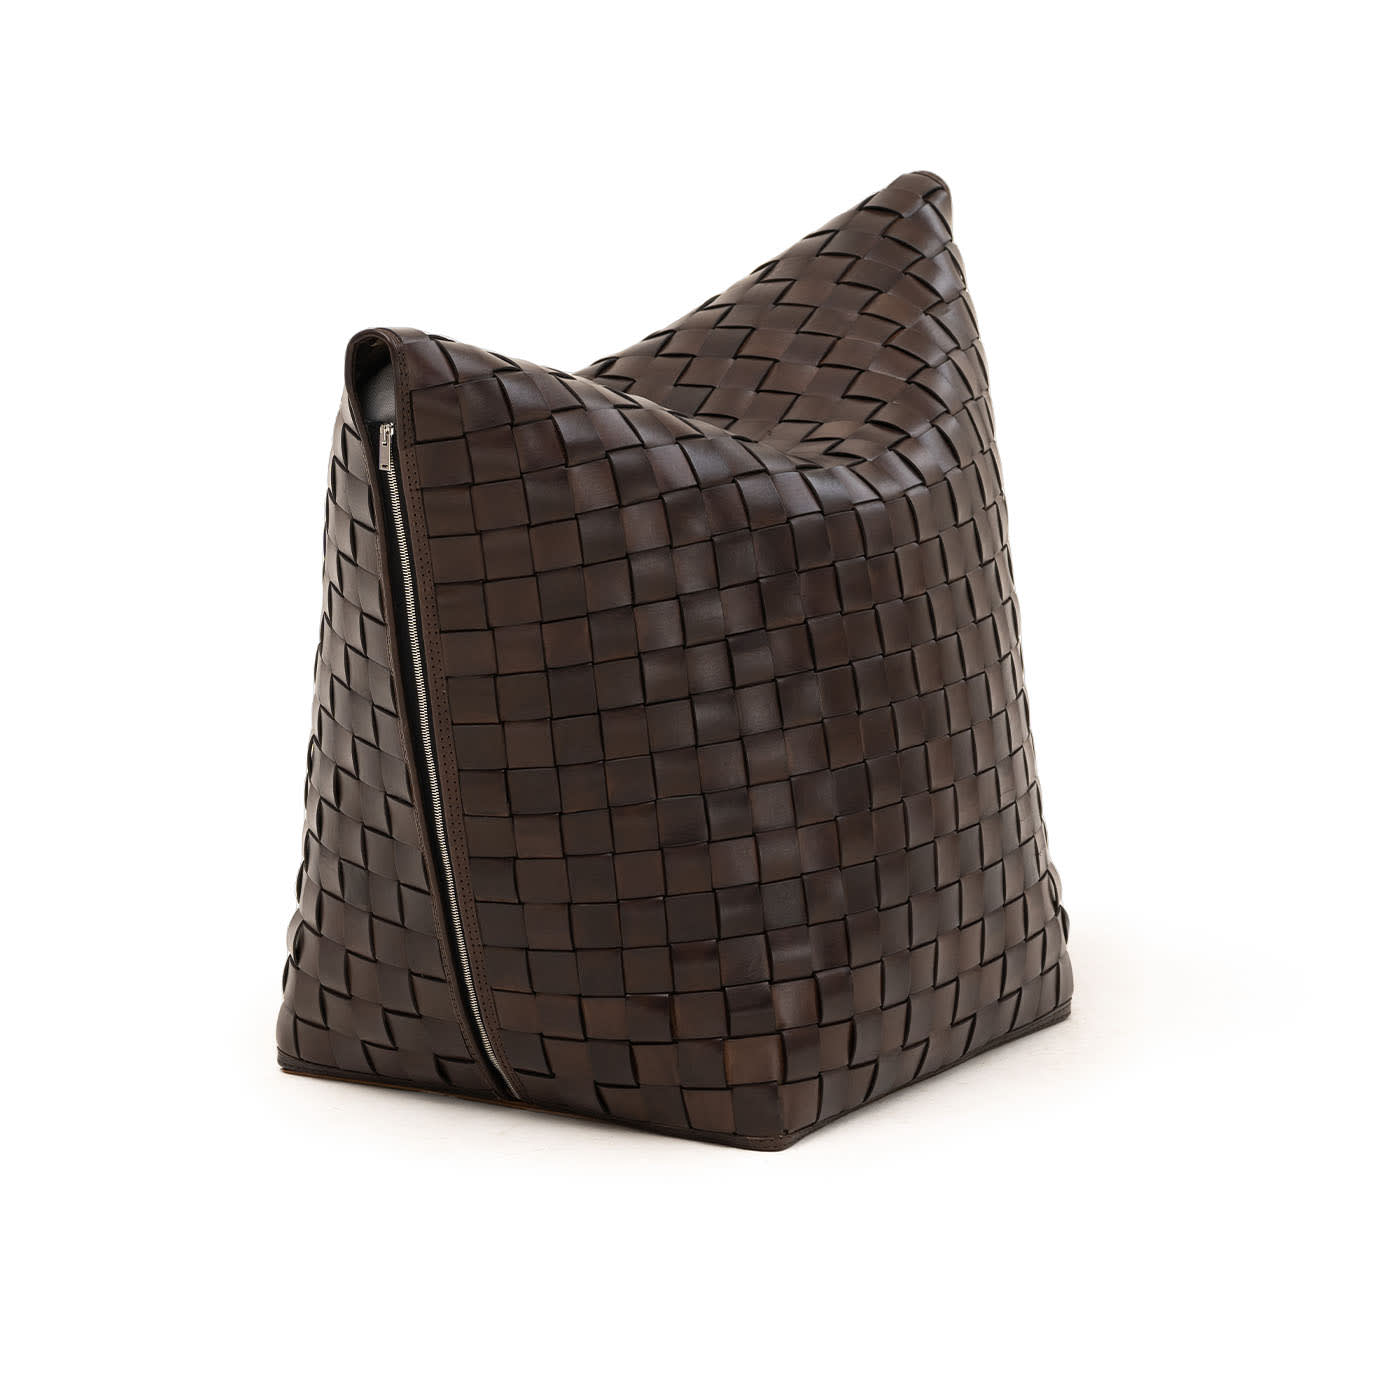 Weaved Mao Bean Bag Chair